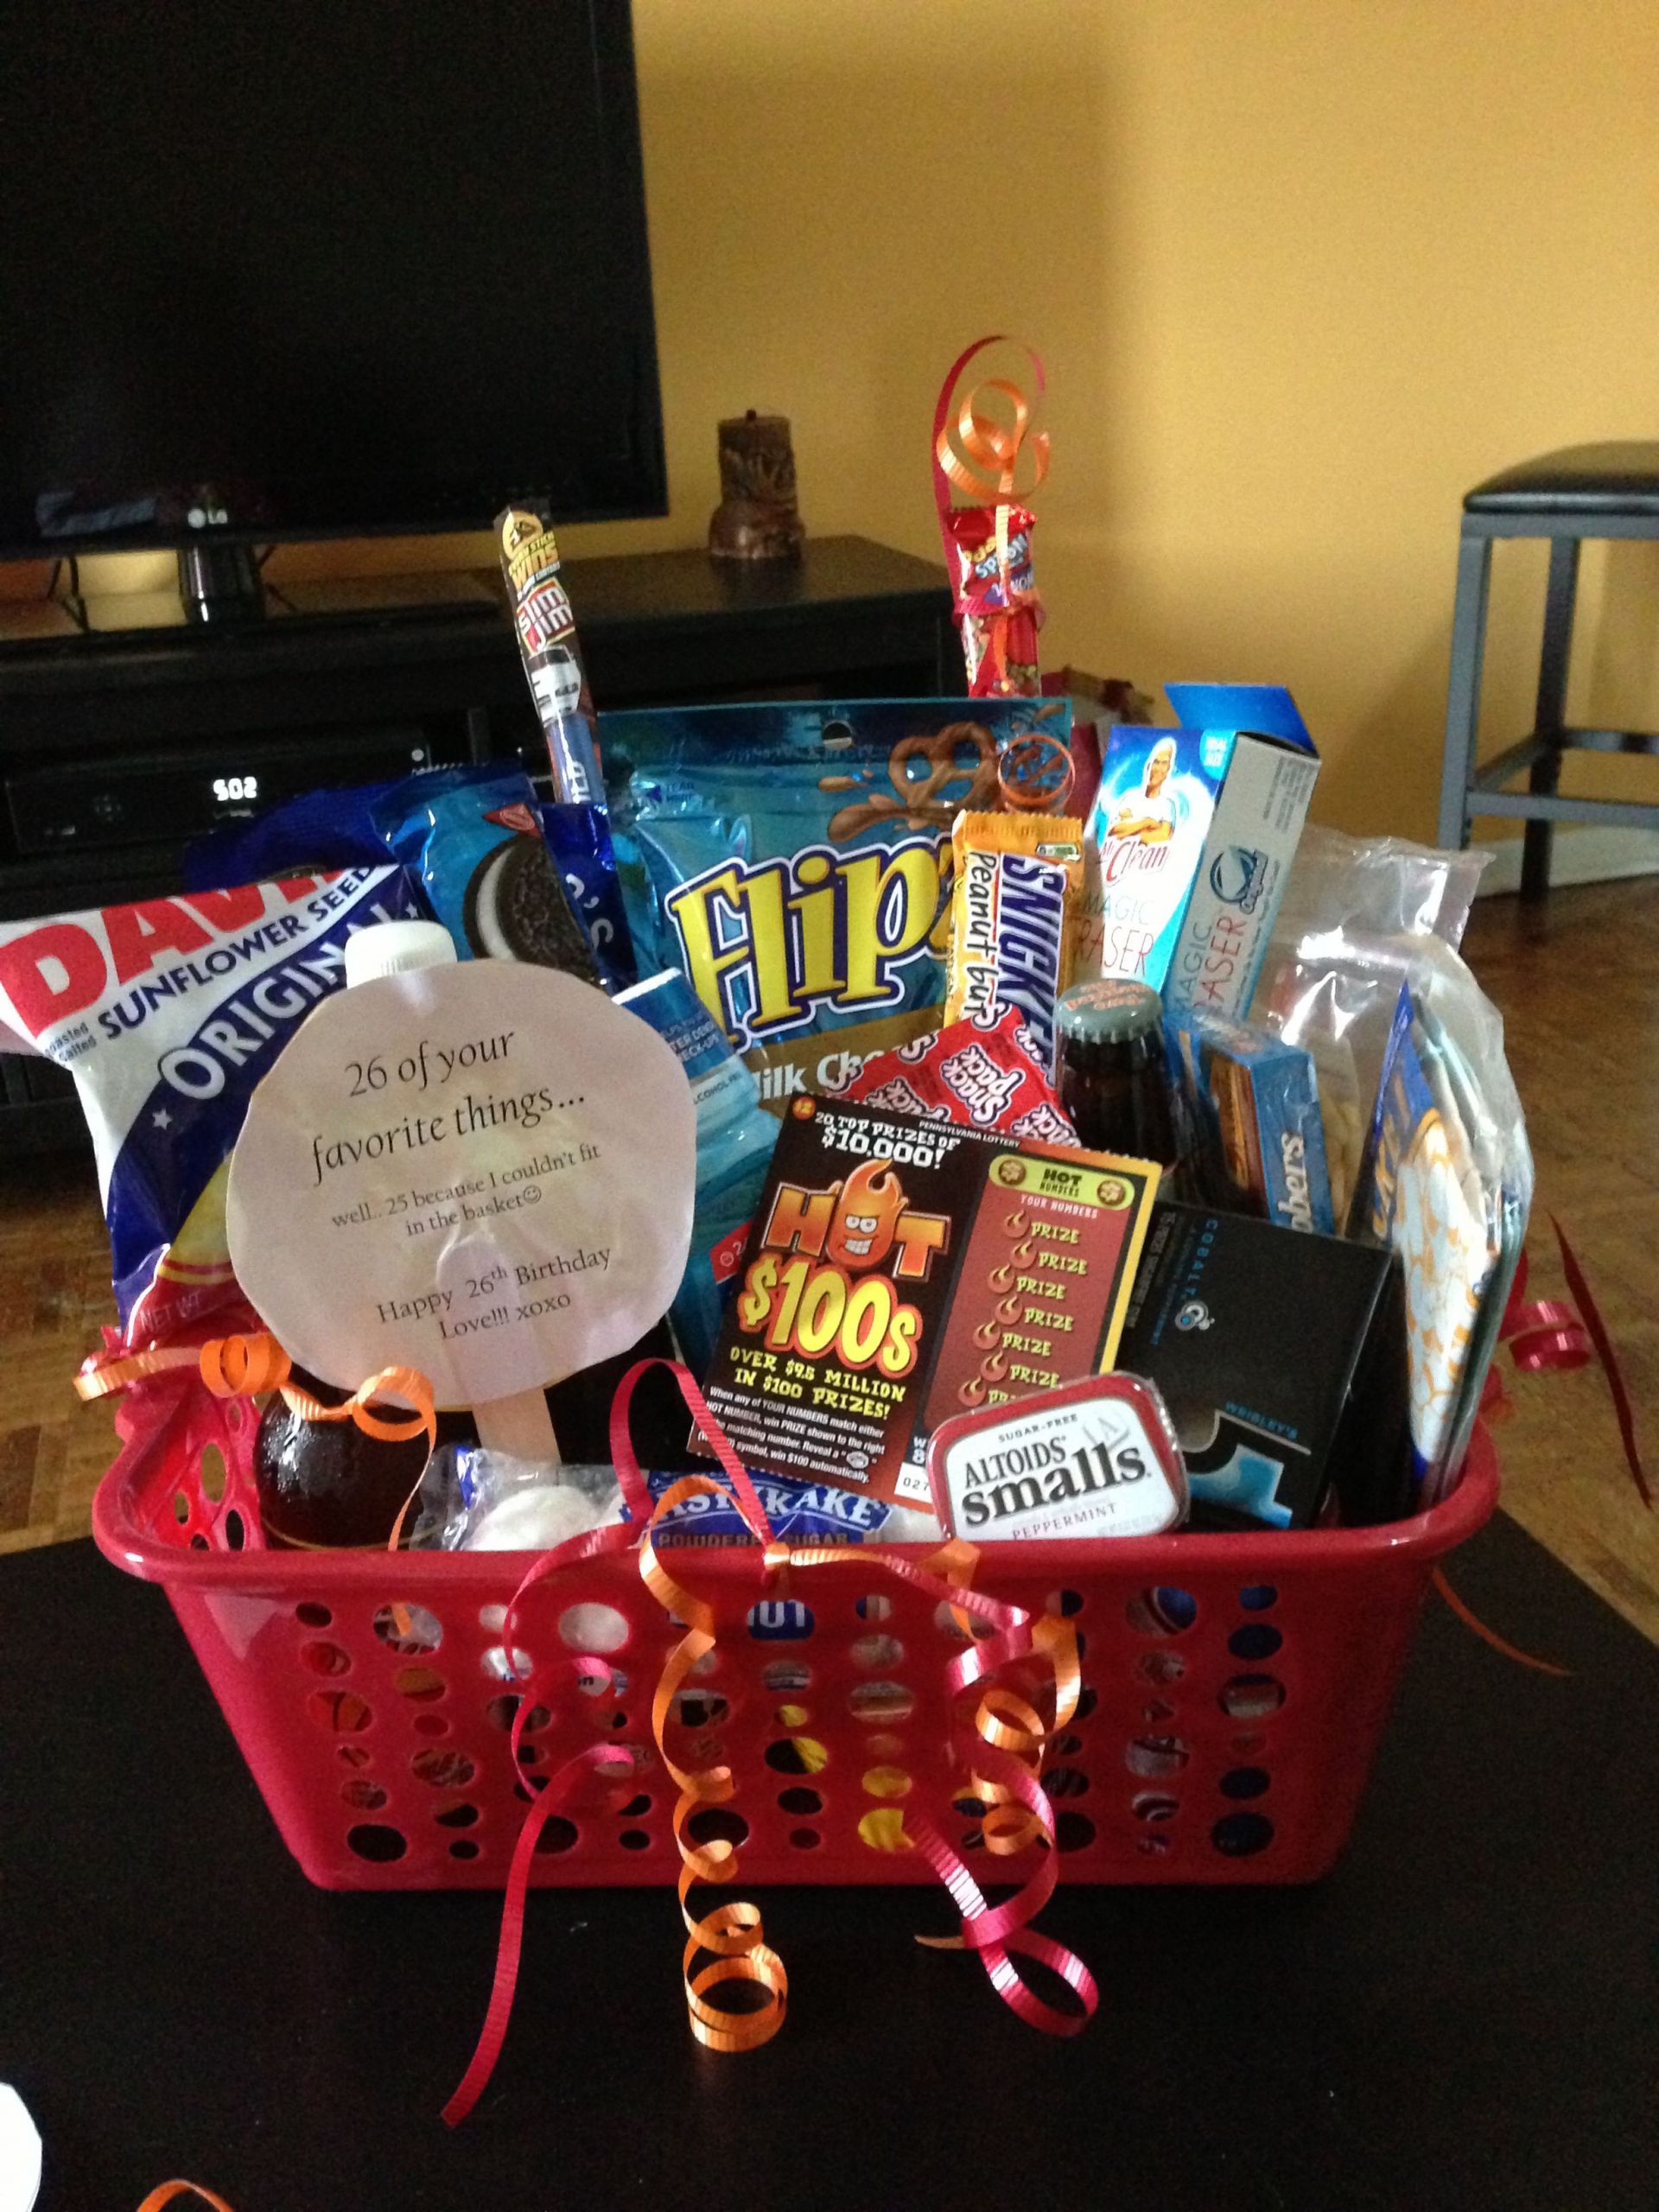 Big Gift Ideas For Boyfriend
 Boyfriend birthday basket 26 of his favorite things for